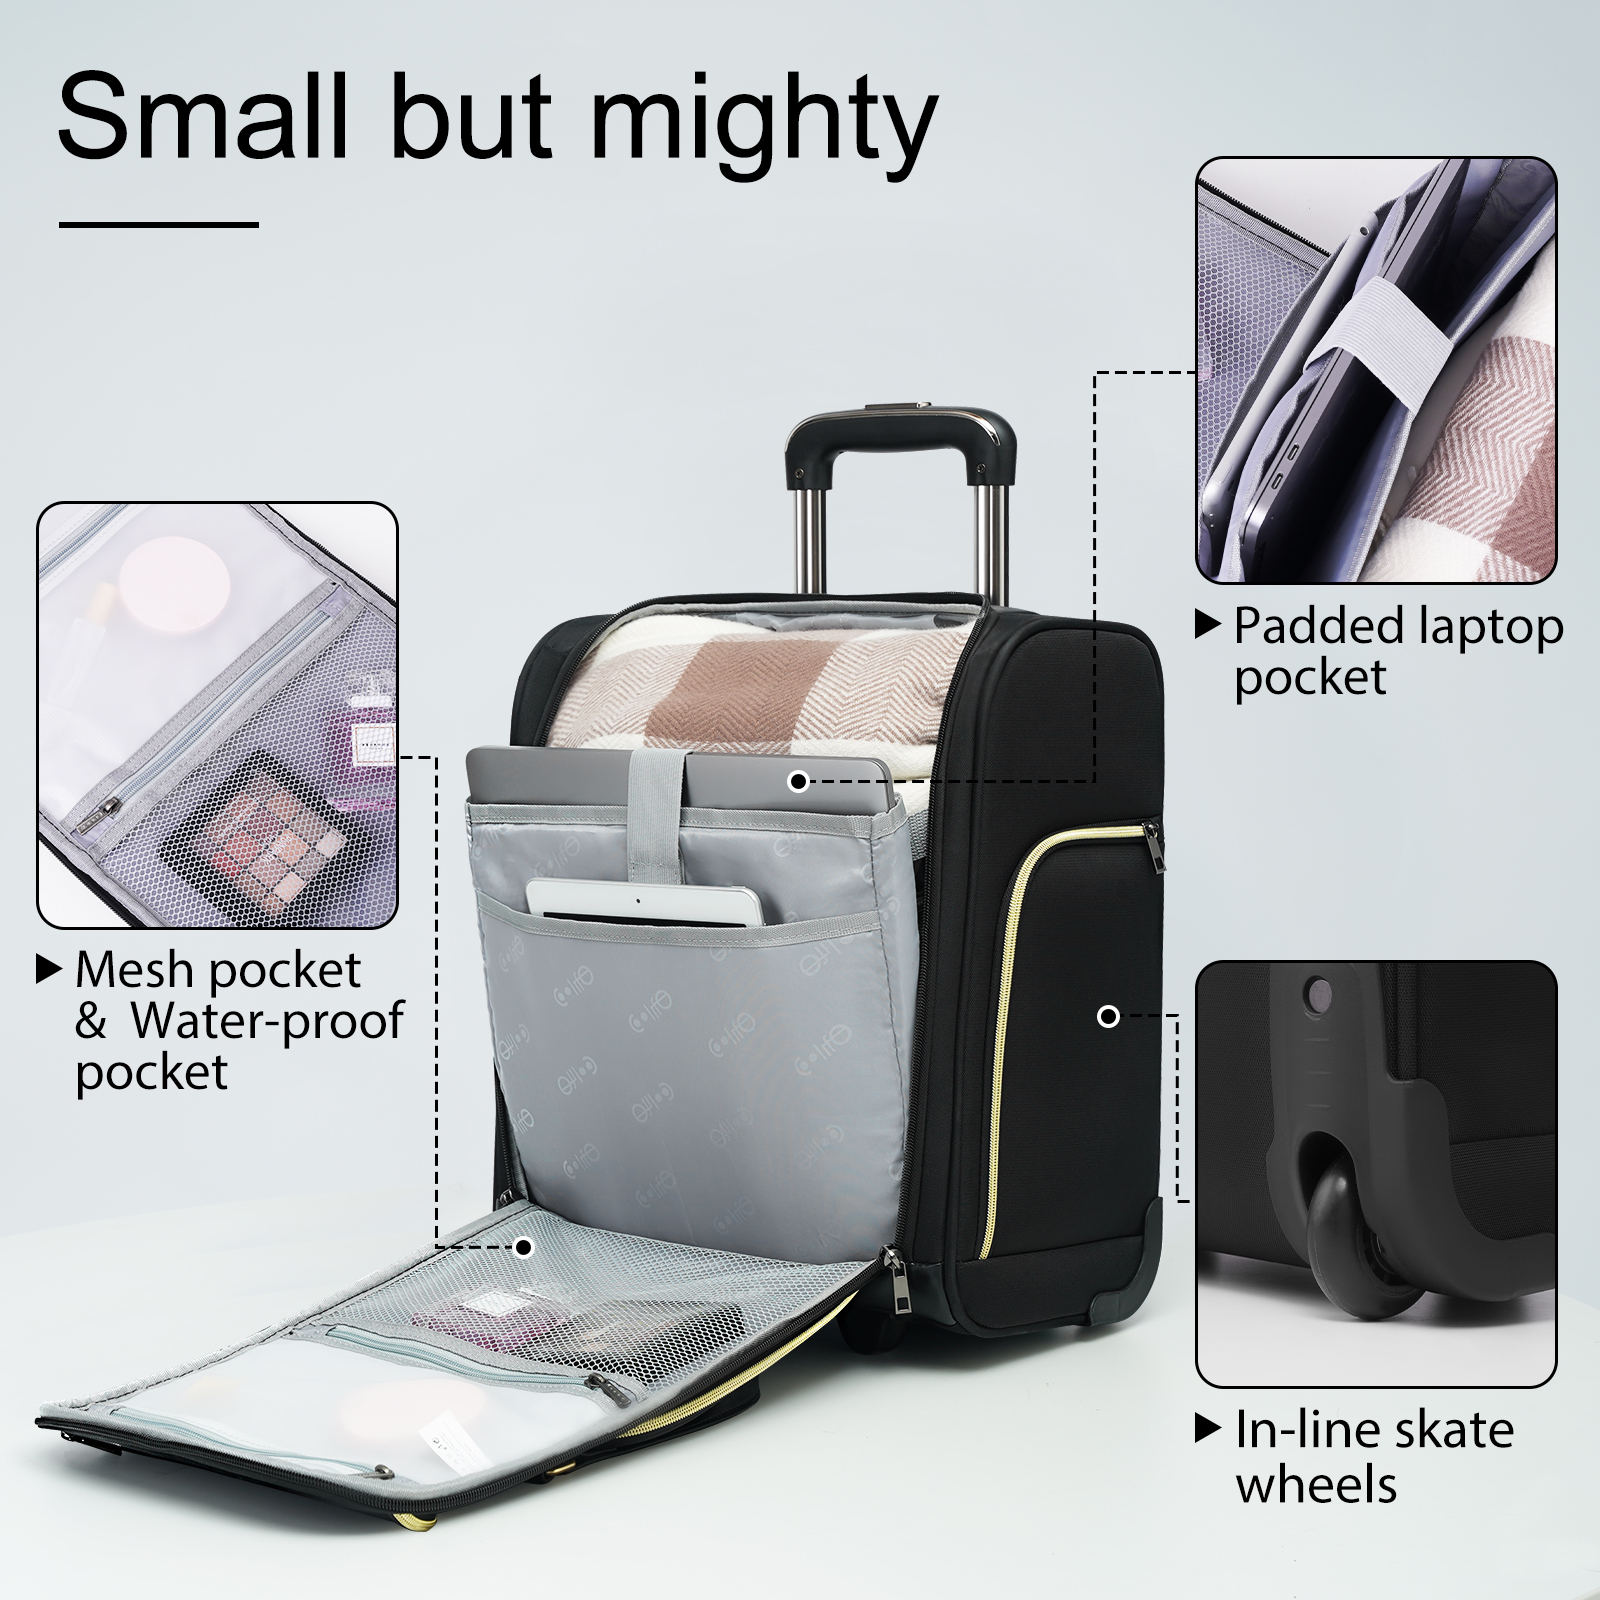 Coolife Luggage Carry On Luggage Underseat Luggage Suitcase Softside Wheeled Luggage Lightweight Rolling Travel Bag Underseater